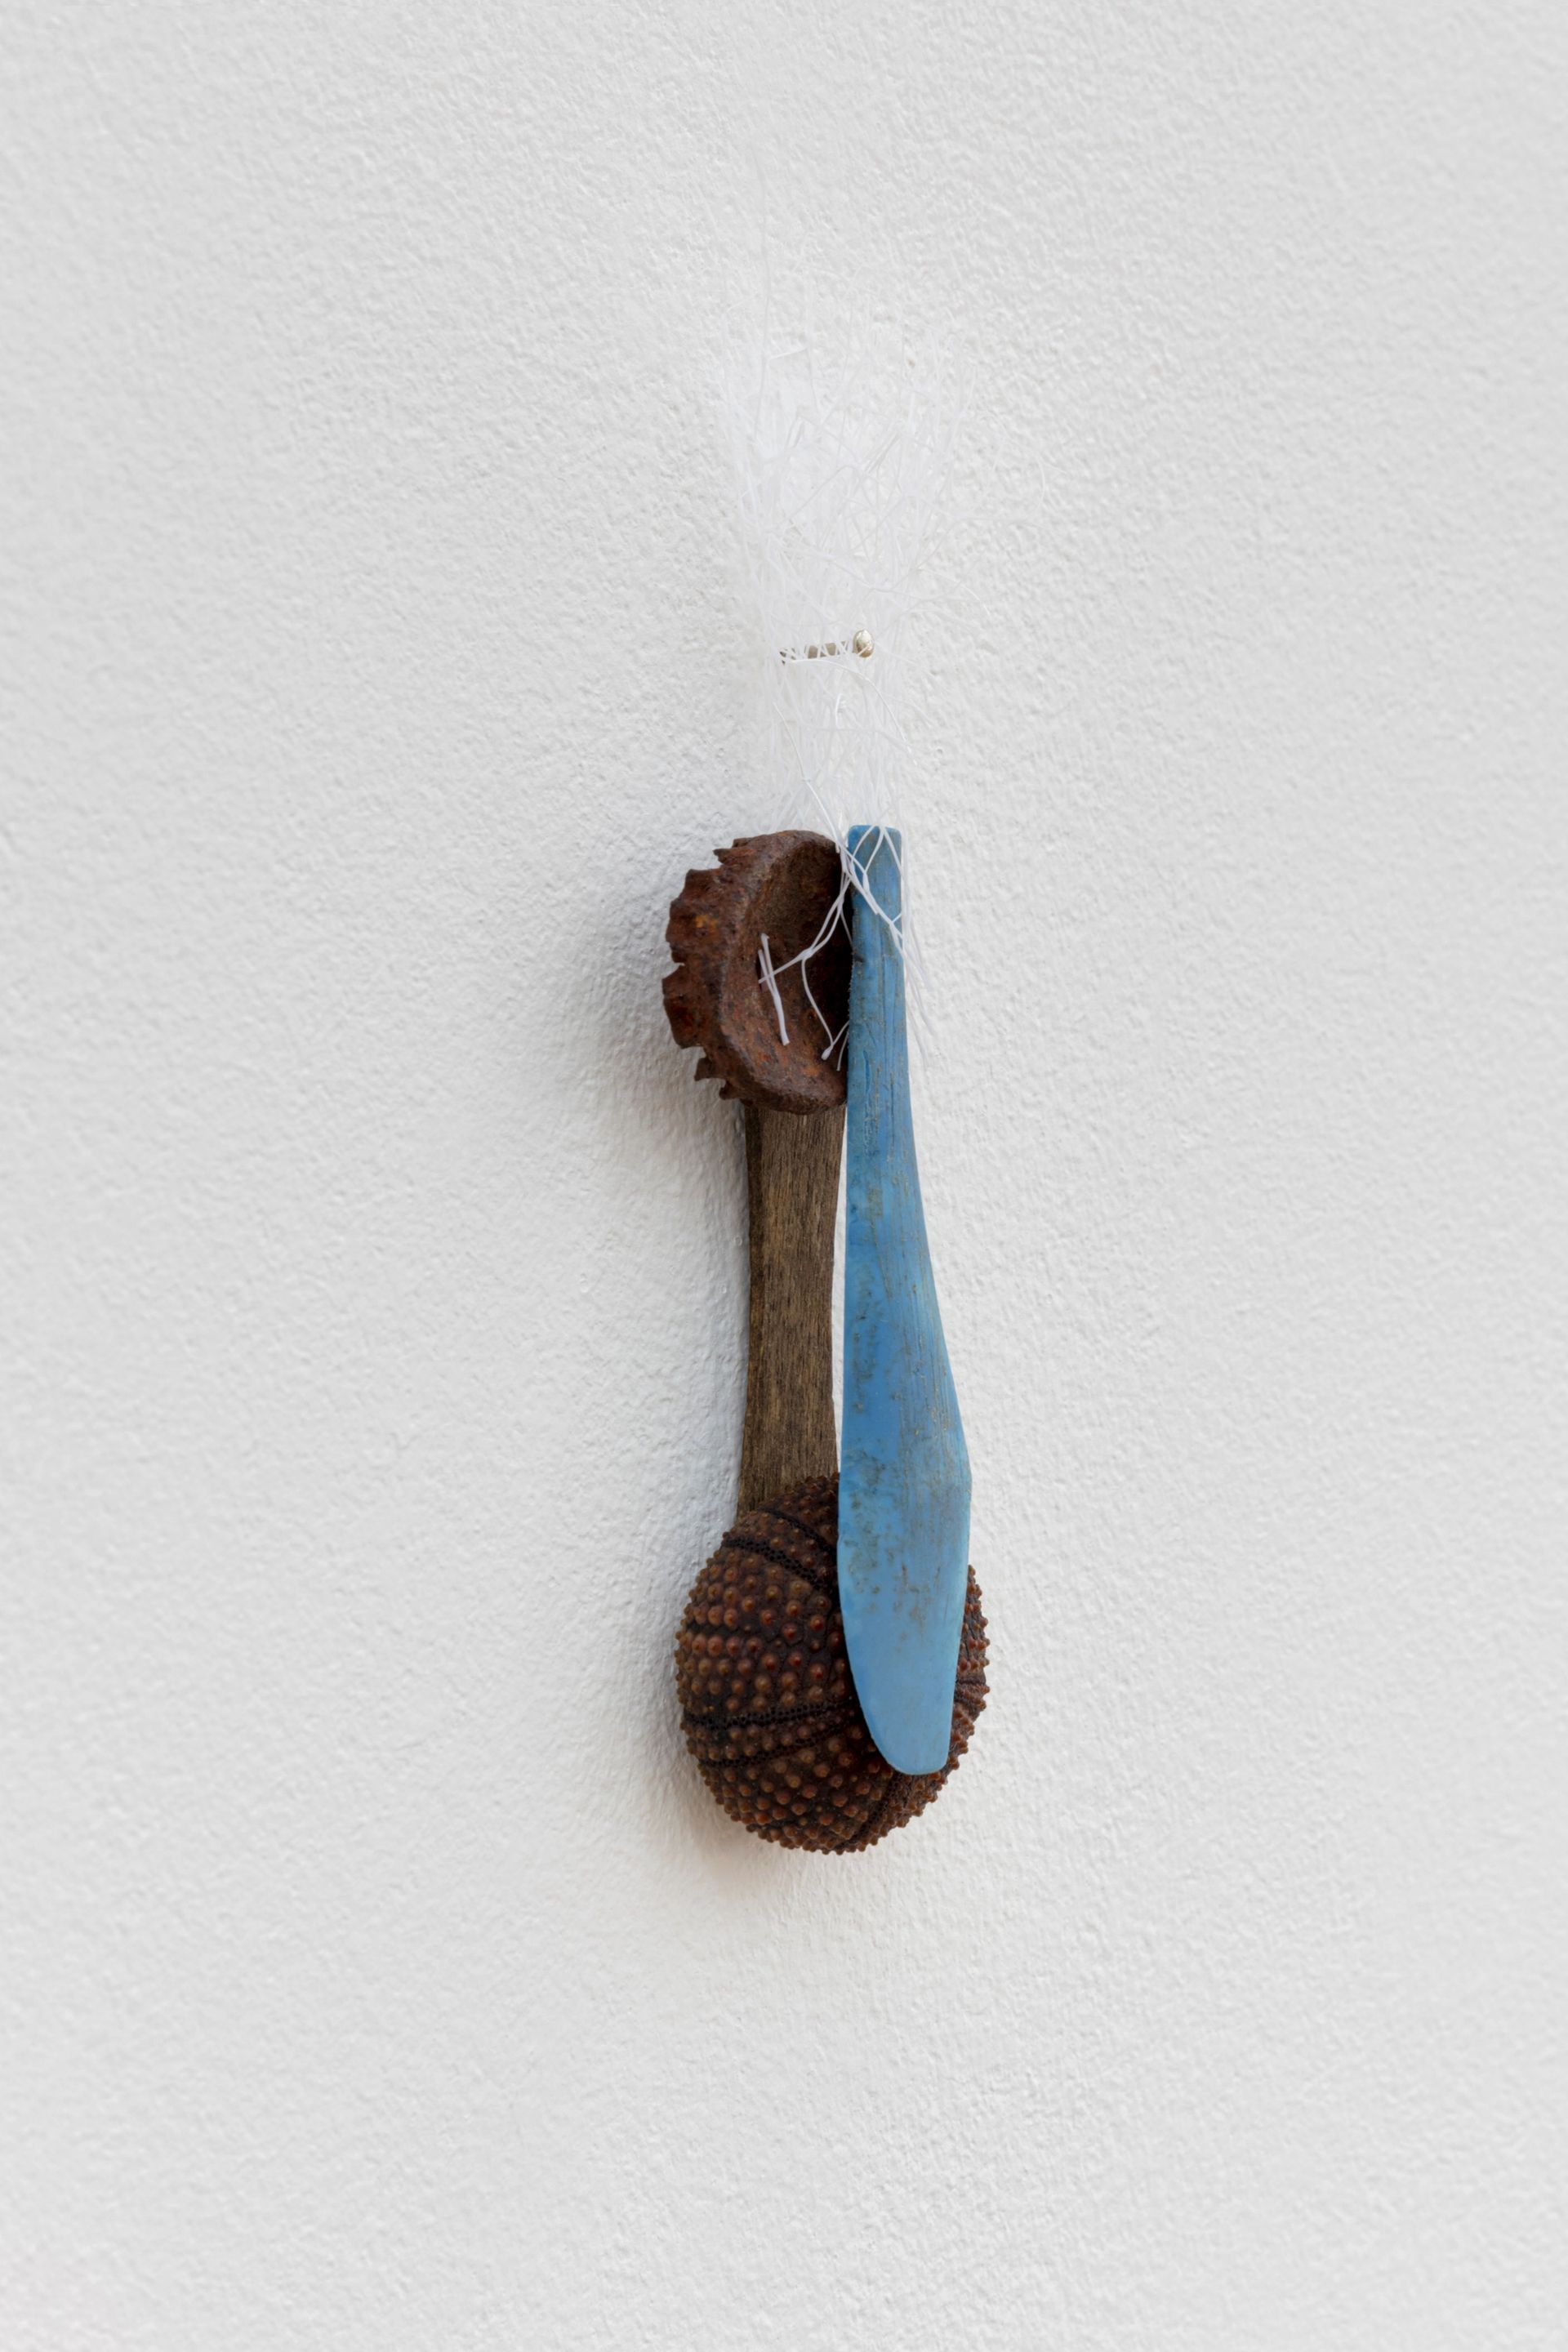 David Fesl, Untitled, 2022, soap sleeve, plastic spoon, popsicle stick, bottle cap, gummy seal, sea urchin shell, 15.4 × 4 × 2 cm, photo: Sebastian Kissel